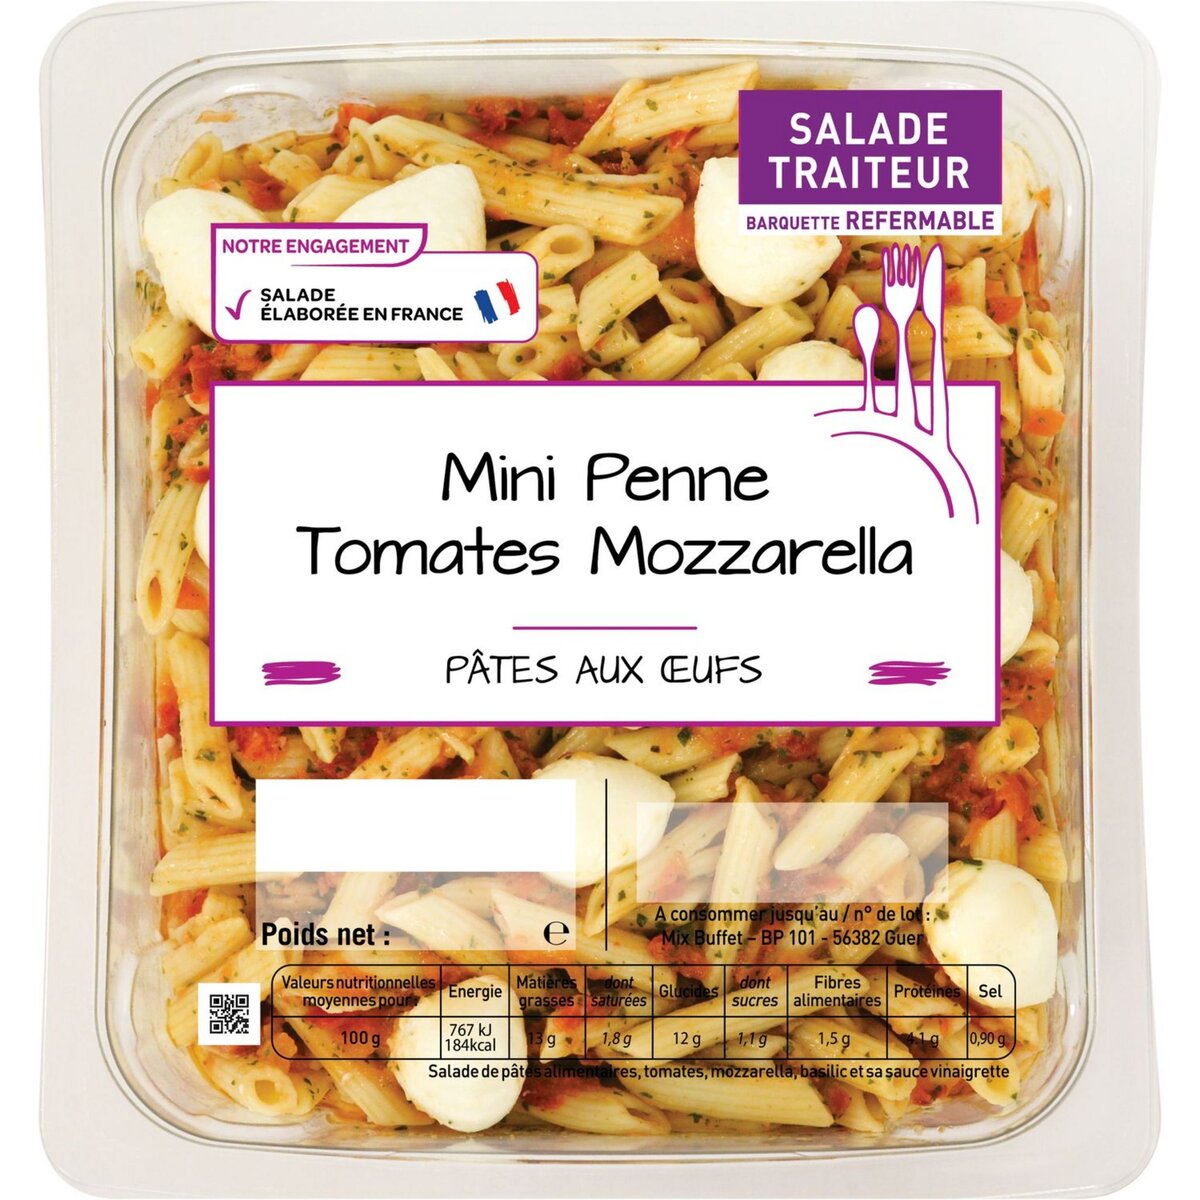 MIX Salade mini penne tomate mozzarella 4 portions 800g